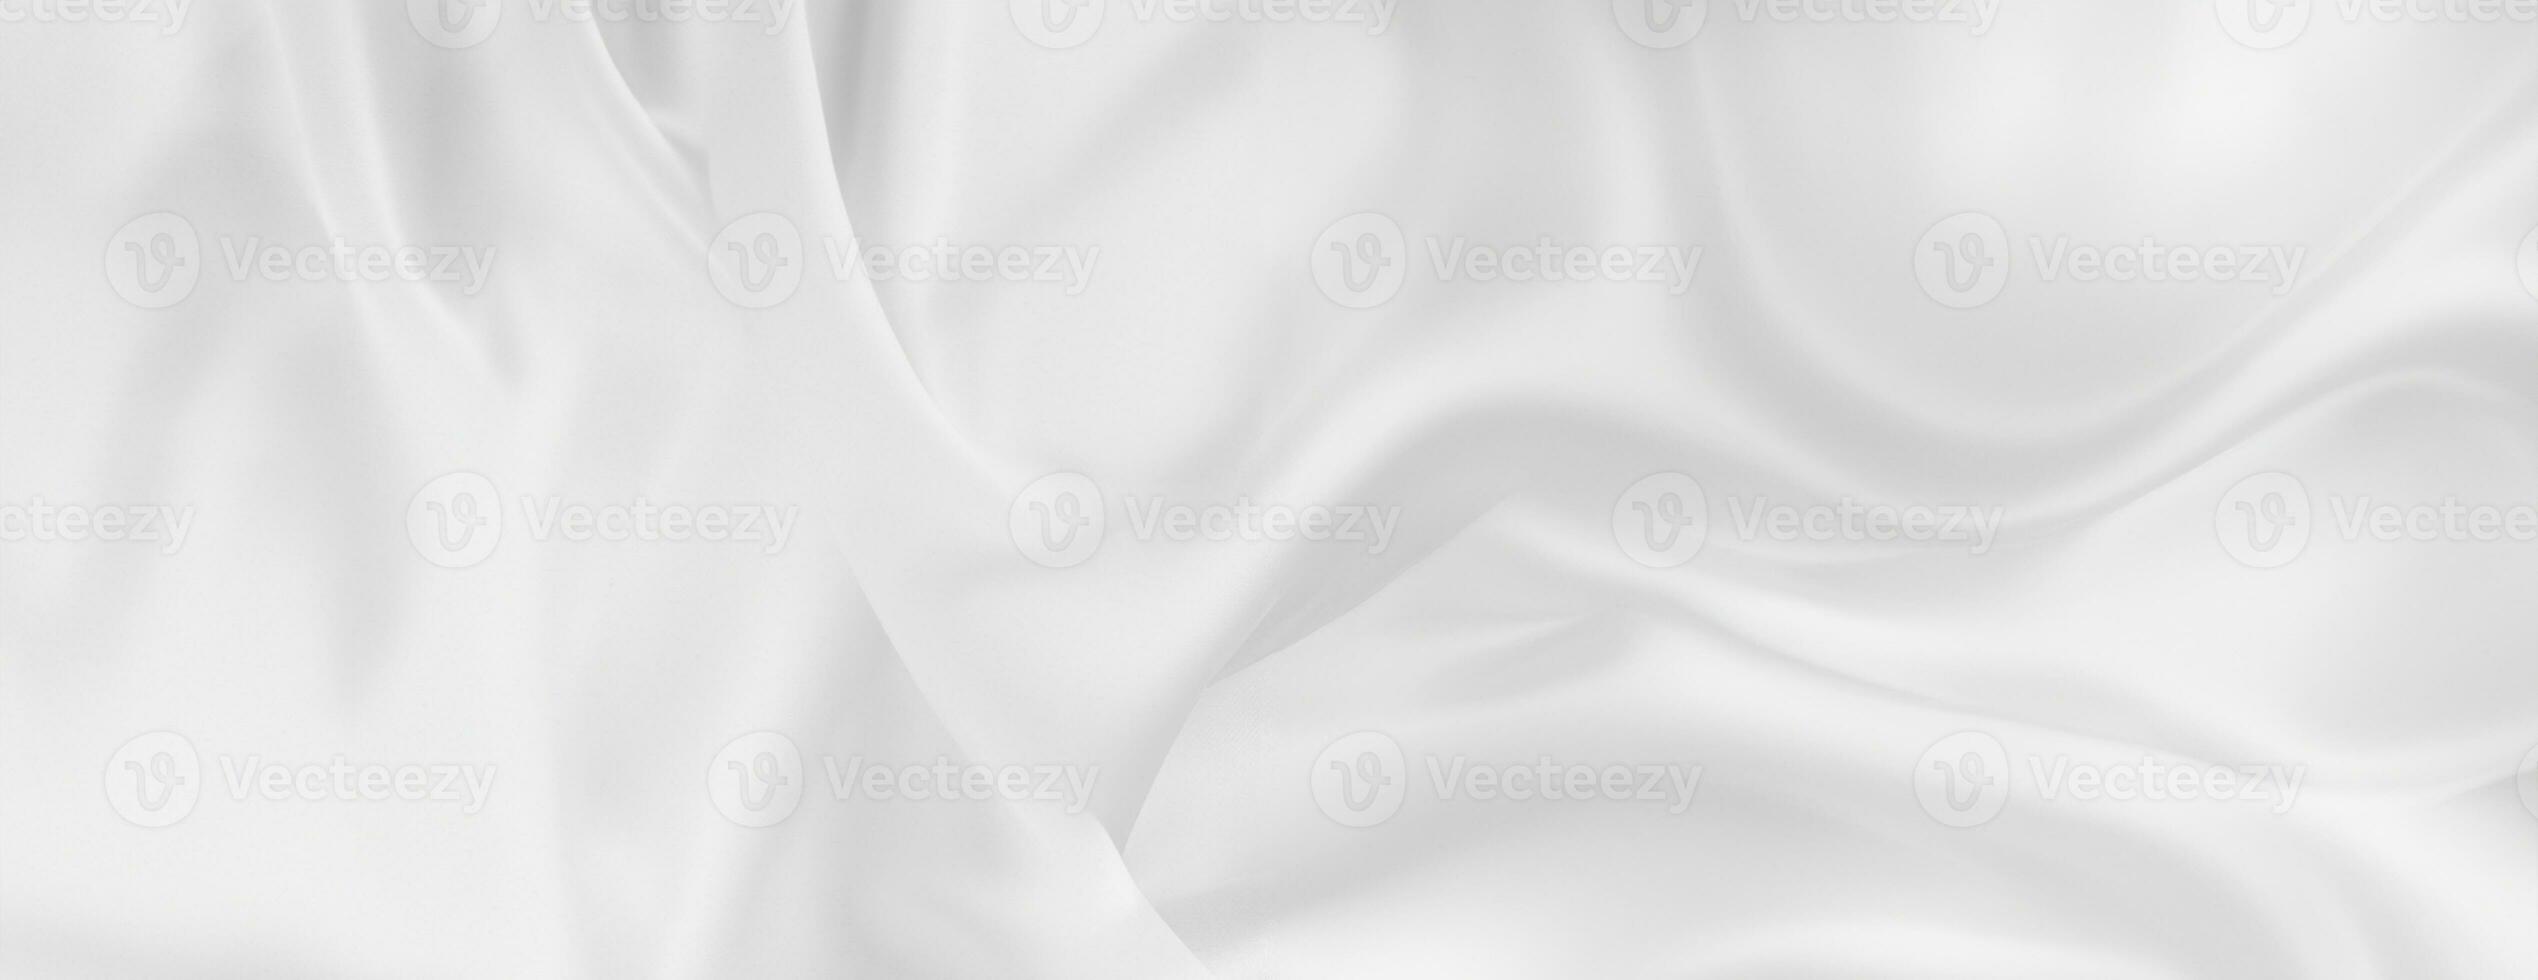 branco seda tecido linhas foto